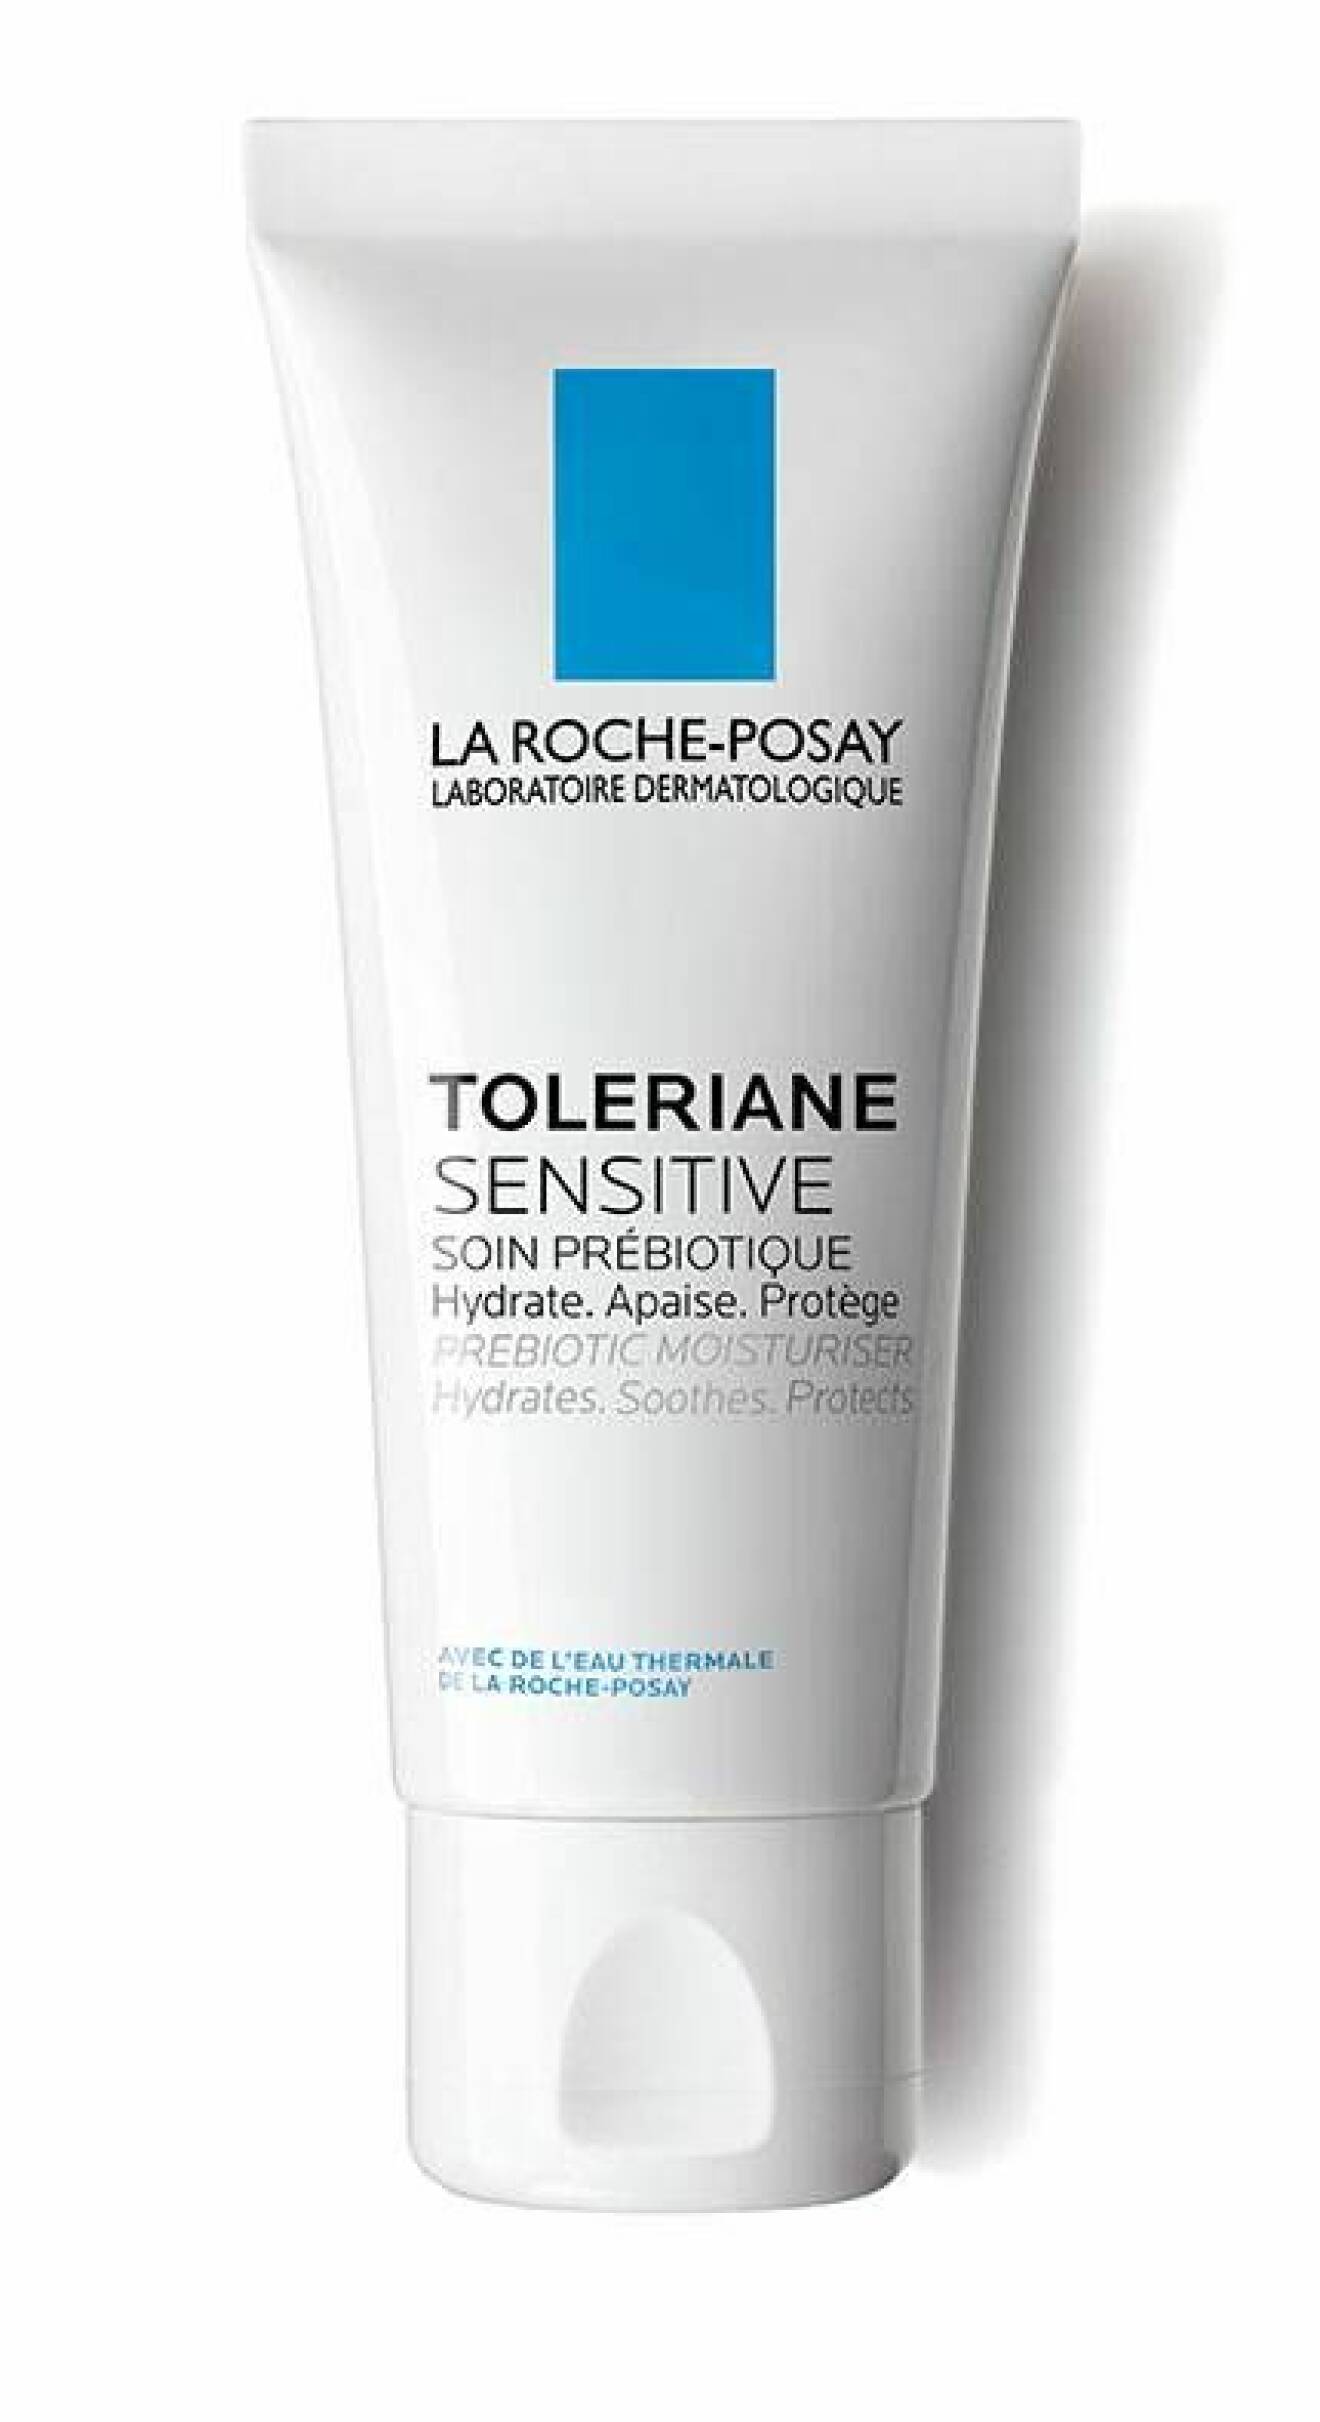 Toleriane Sensitive från La Roche-Posay